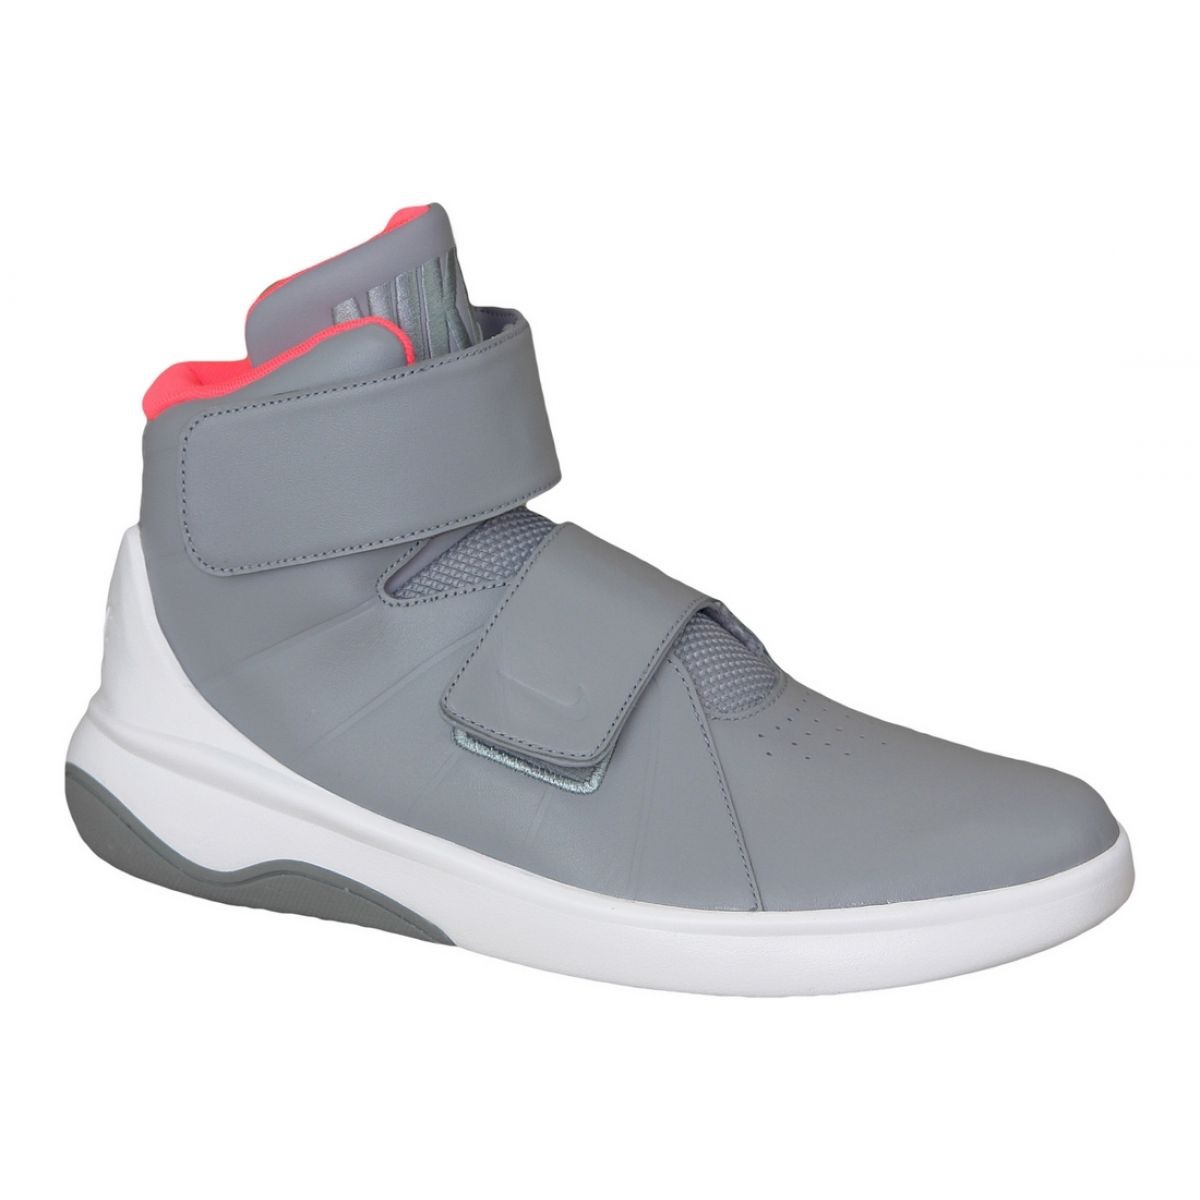 Nike Marxman M 832764-002 shoes grey 